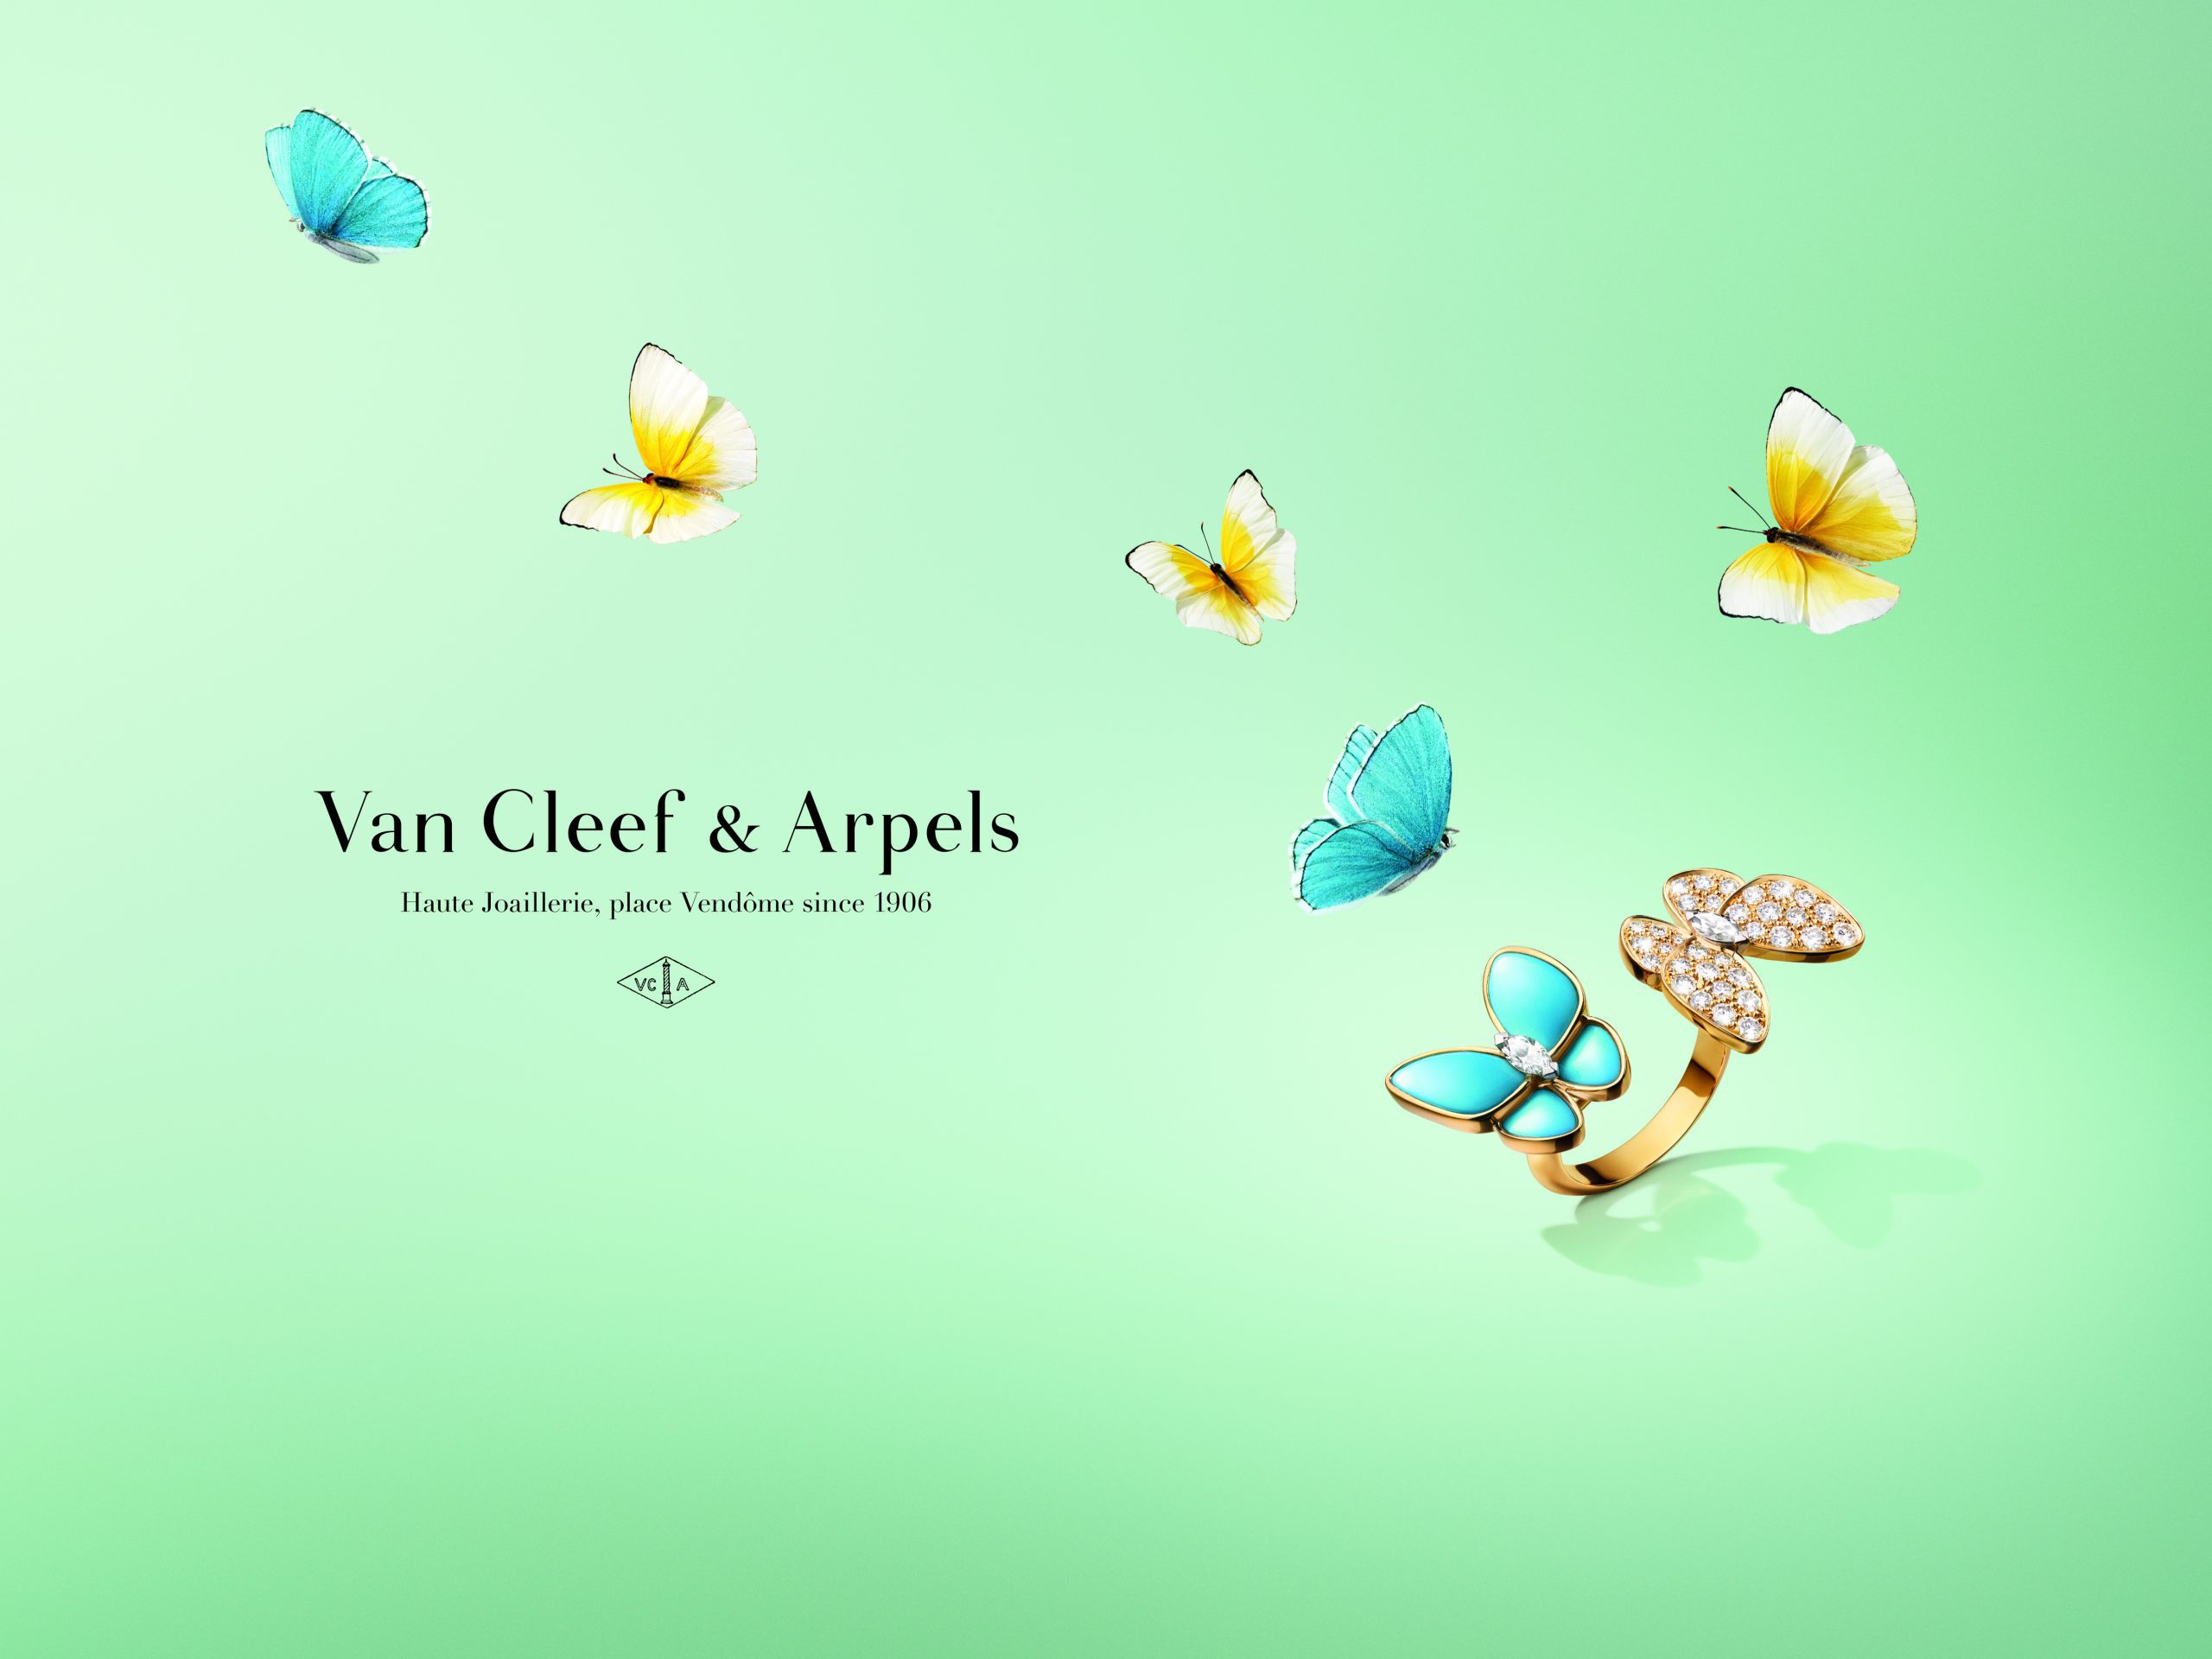 Van Cleef & Arpels Two Butterfly ธรรมชาติโบยบิน